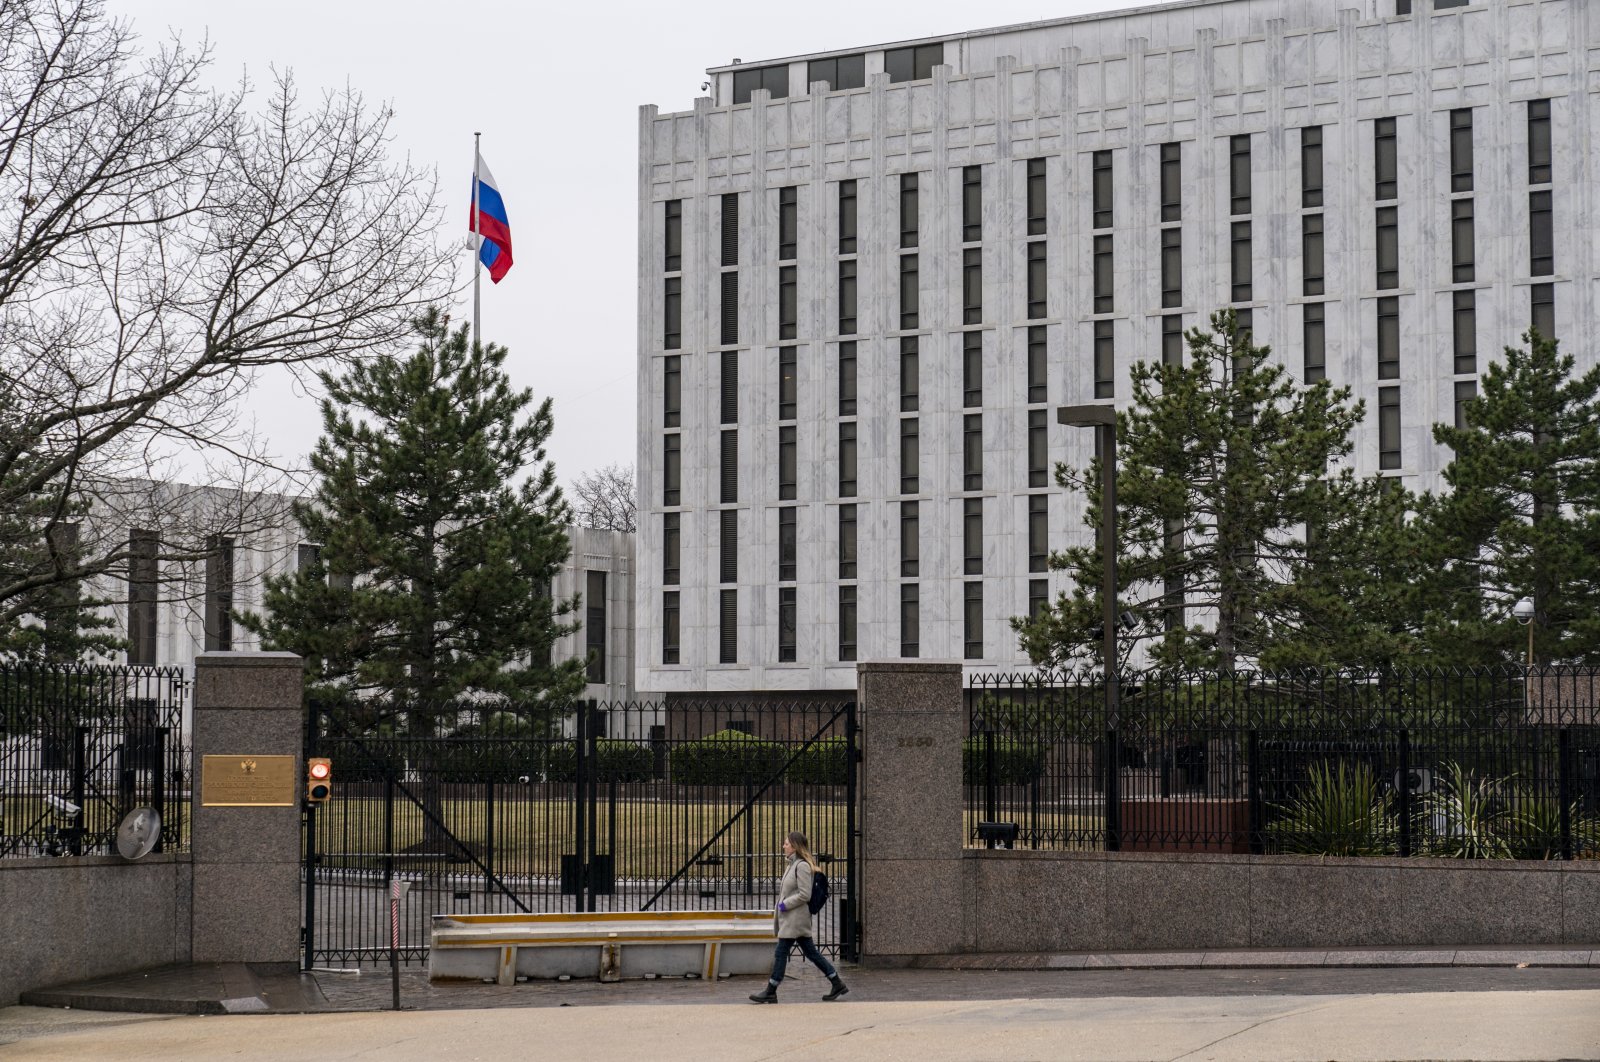 The Russian Embassy is seen in Washington, Feb. 24, 2022. (AP Photo)